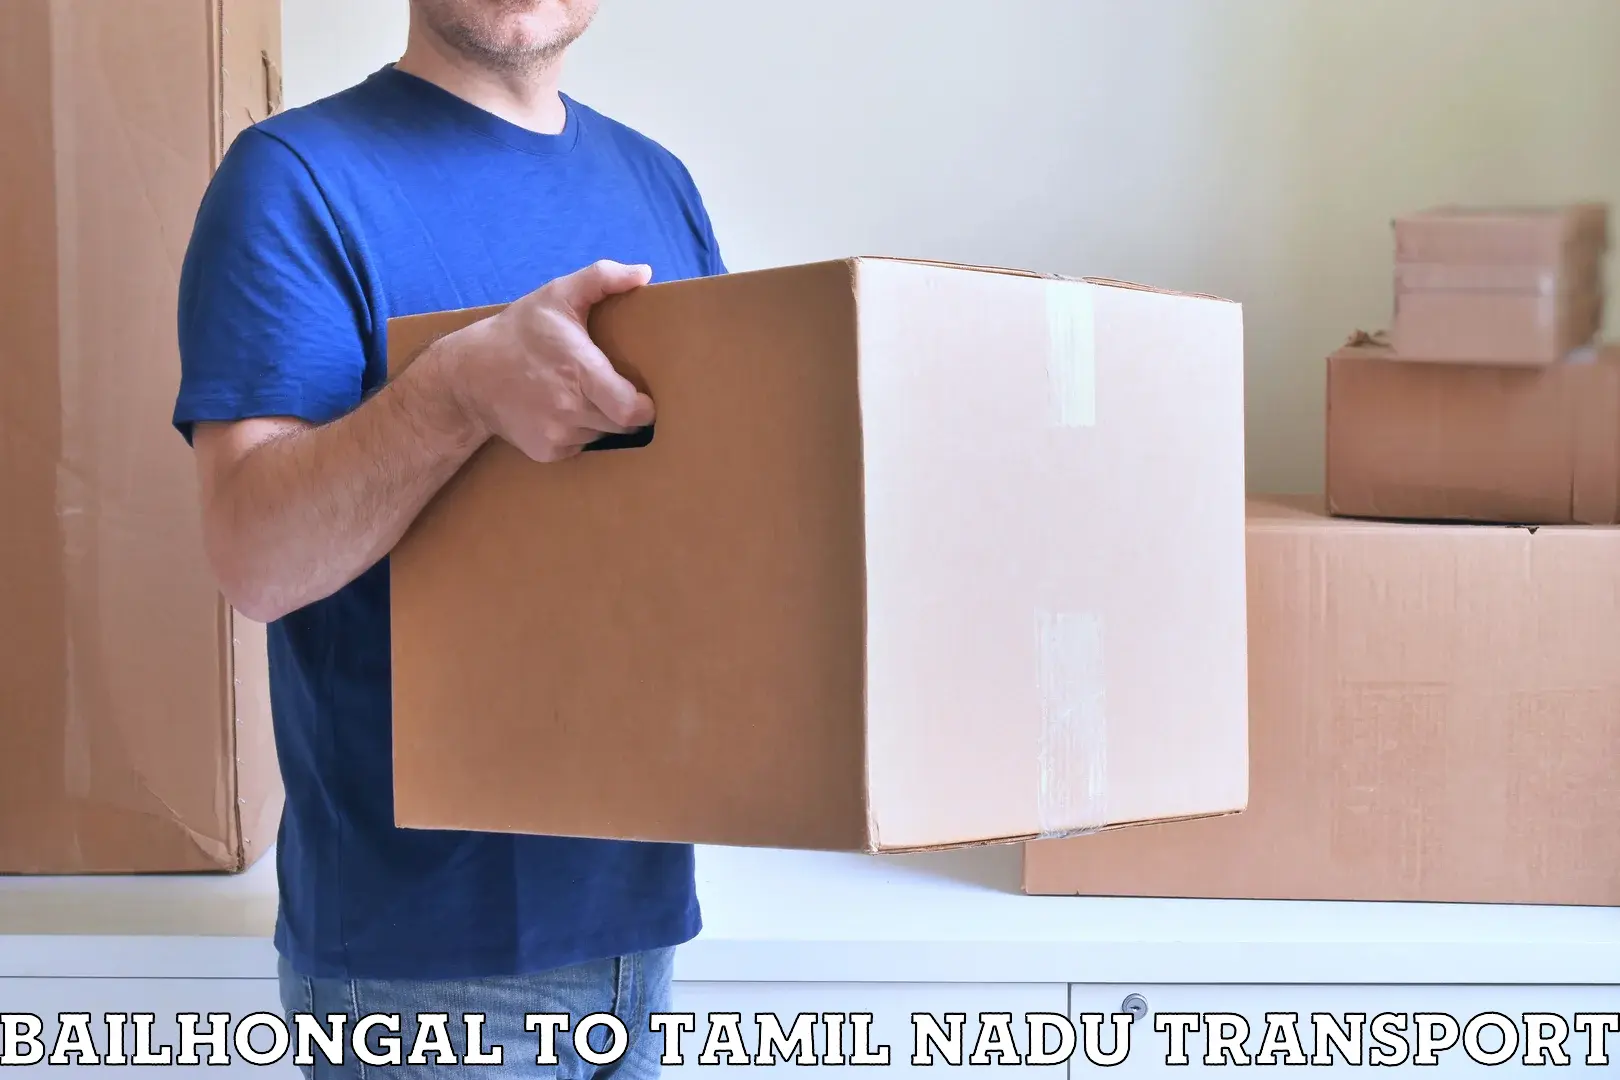 Nationwide transport services Bailhongal to Tamil Nadu